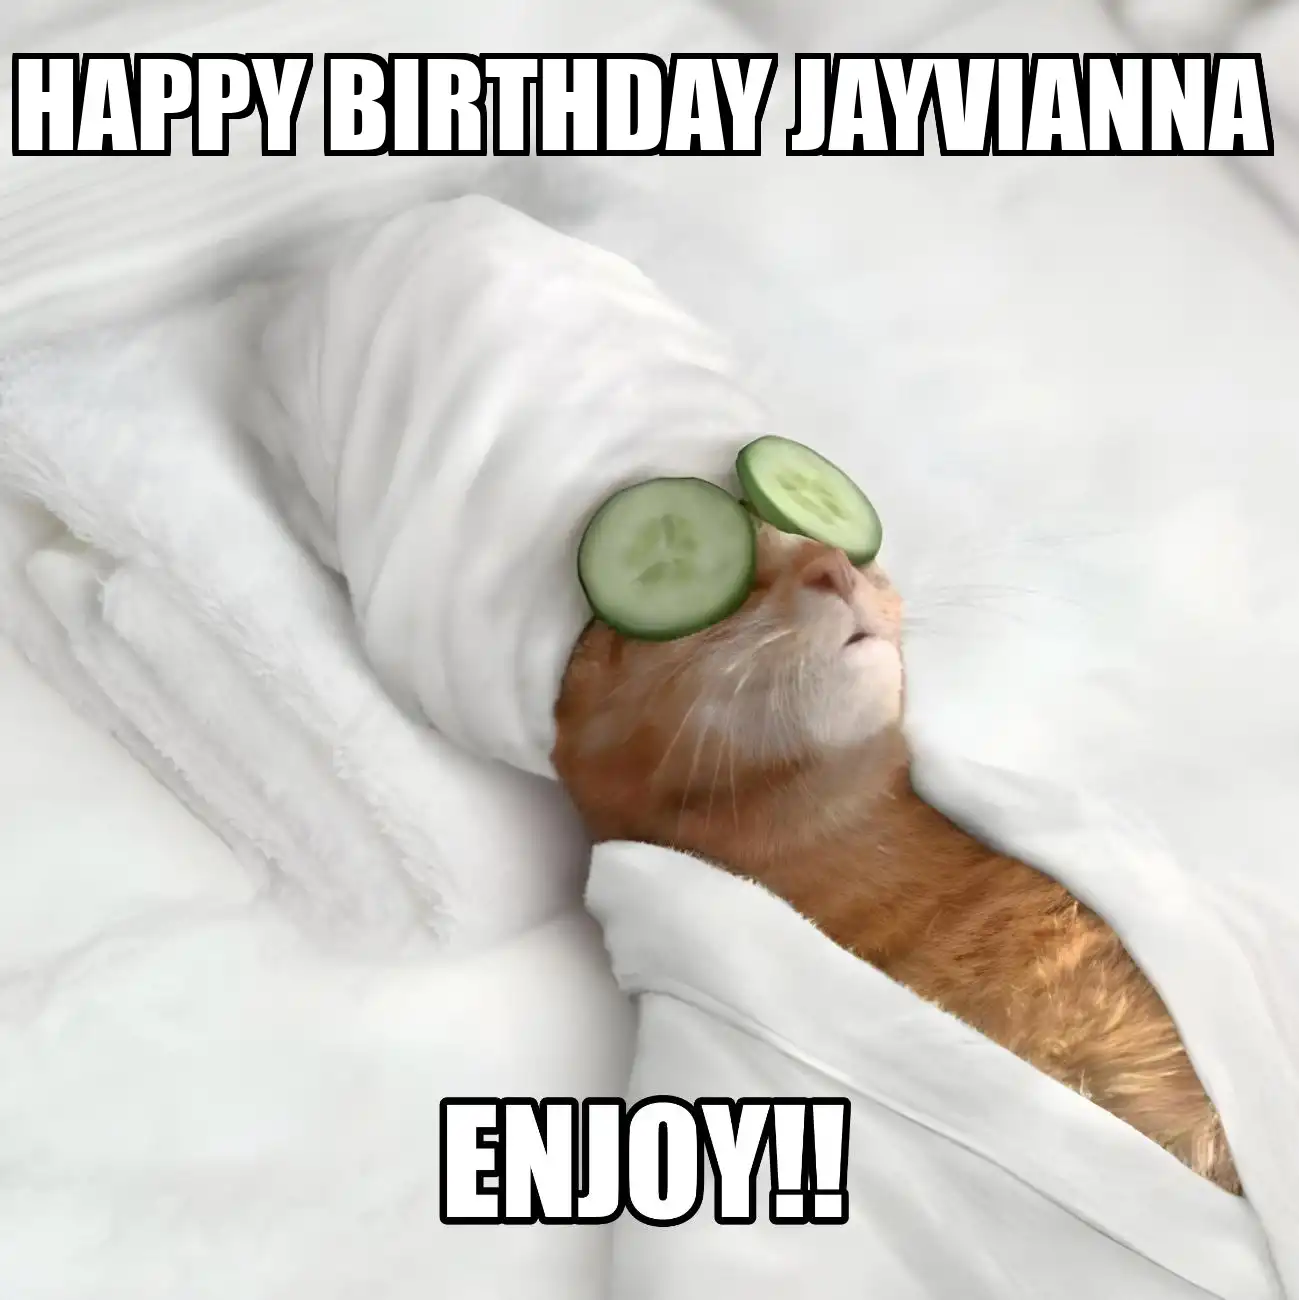 Happy Birthday Jayvianna Enjoy Cat Meme